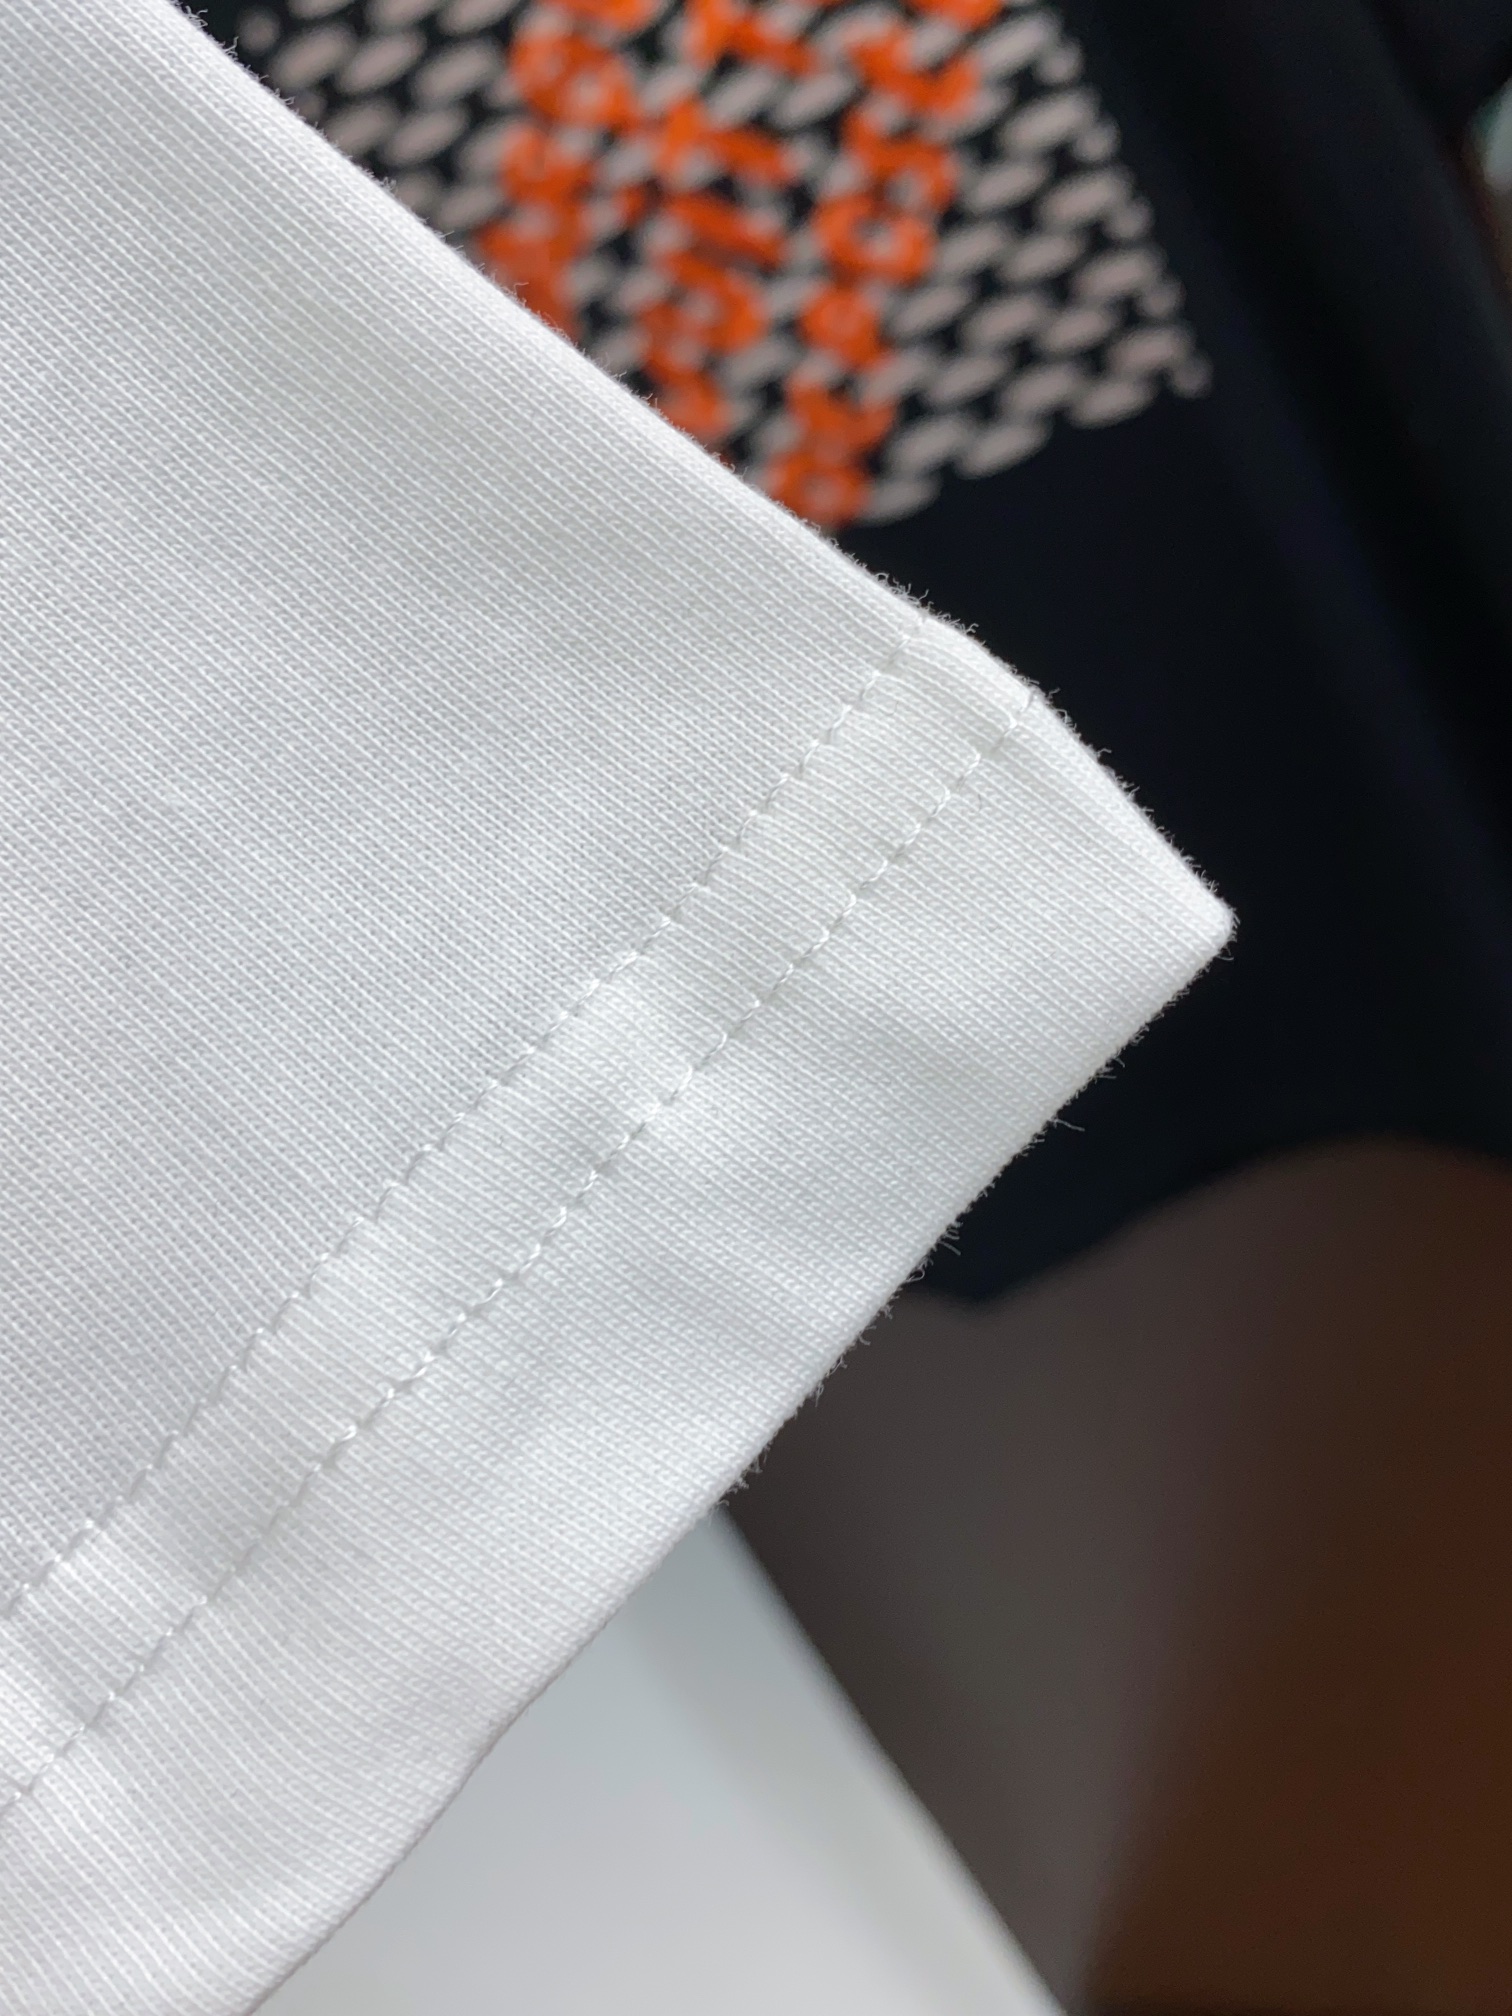 v路易威登修身版型M-3xL24春夏早春新款短袖T恤顶级制作工艺进口纯棉面料手感细腻每个字母饱满立体清晰